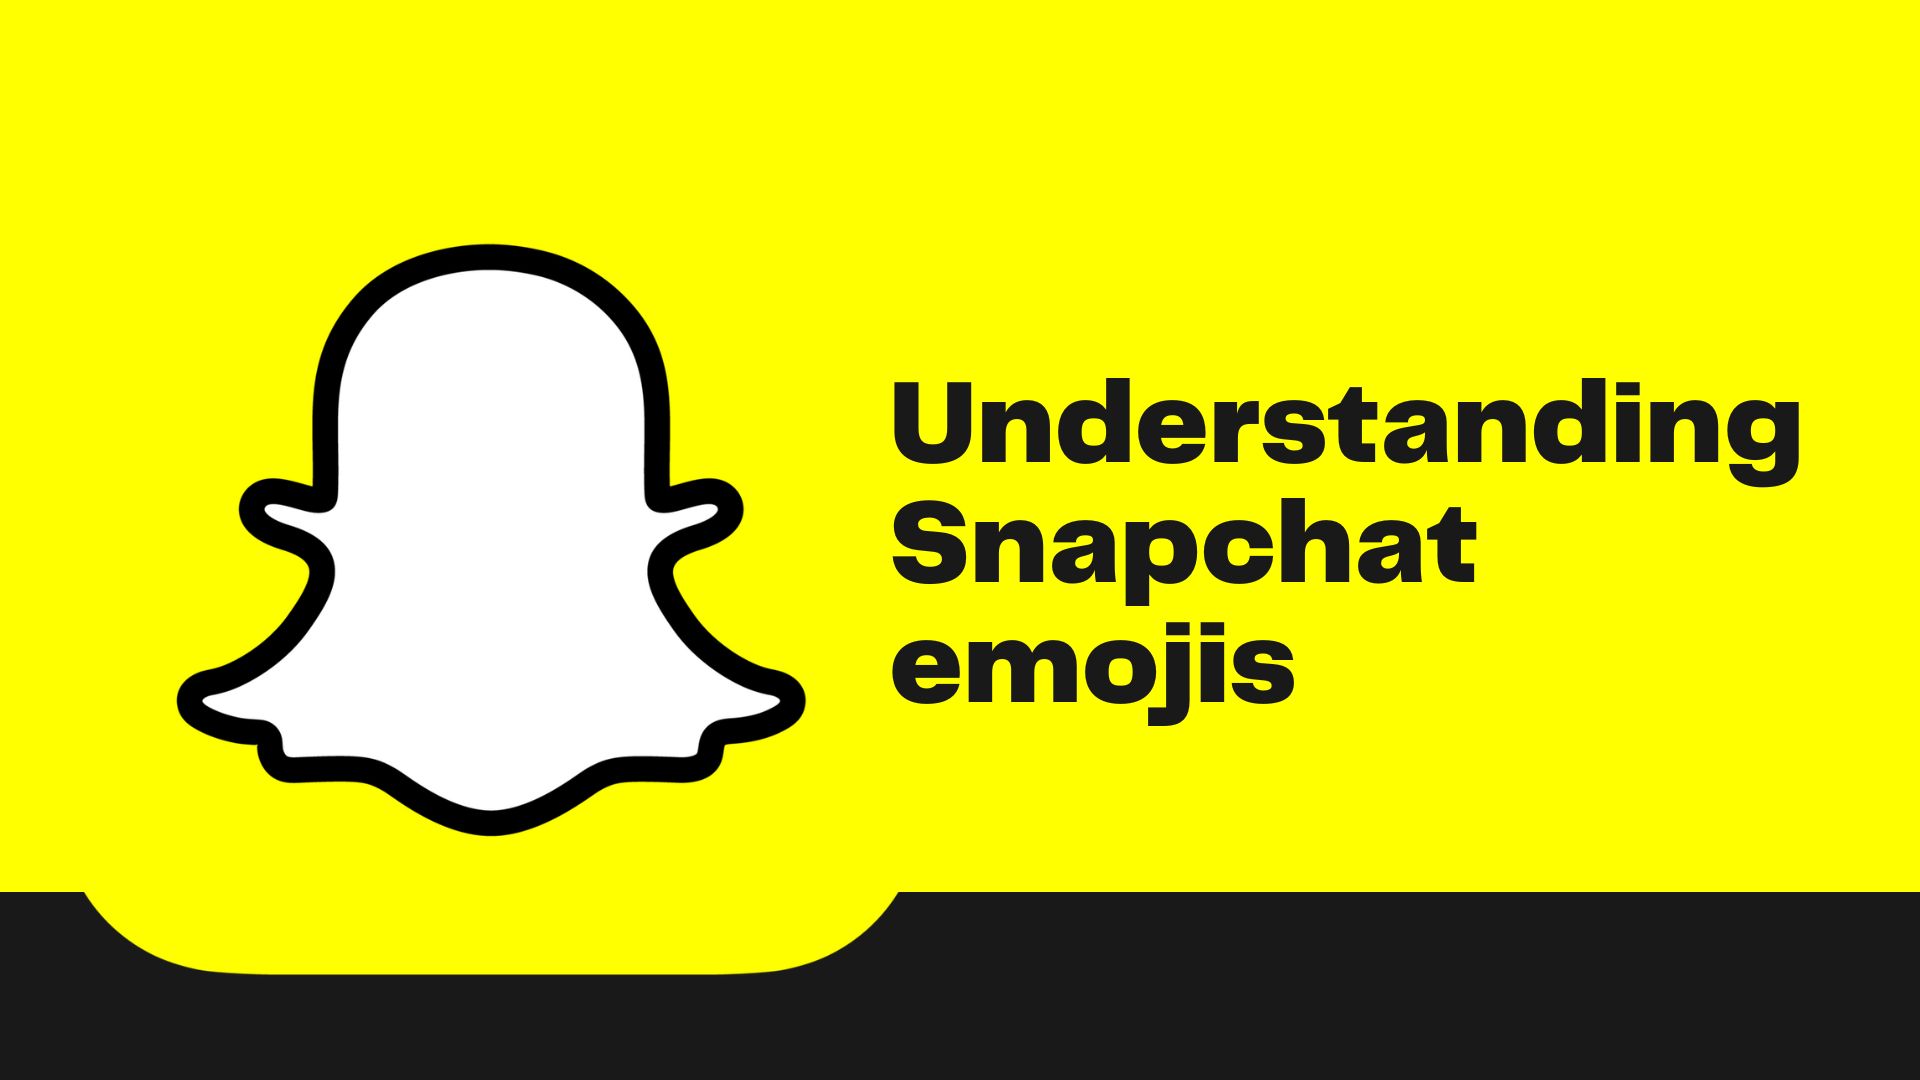 Understanding Snapchat emojis